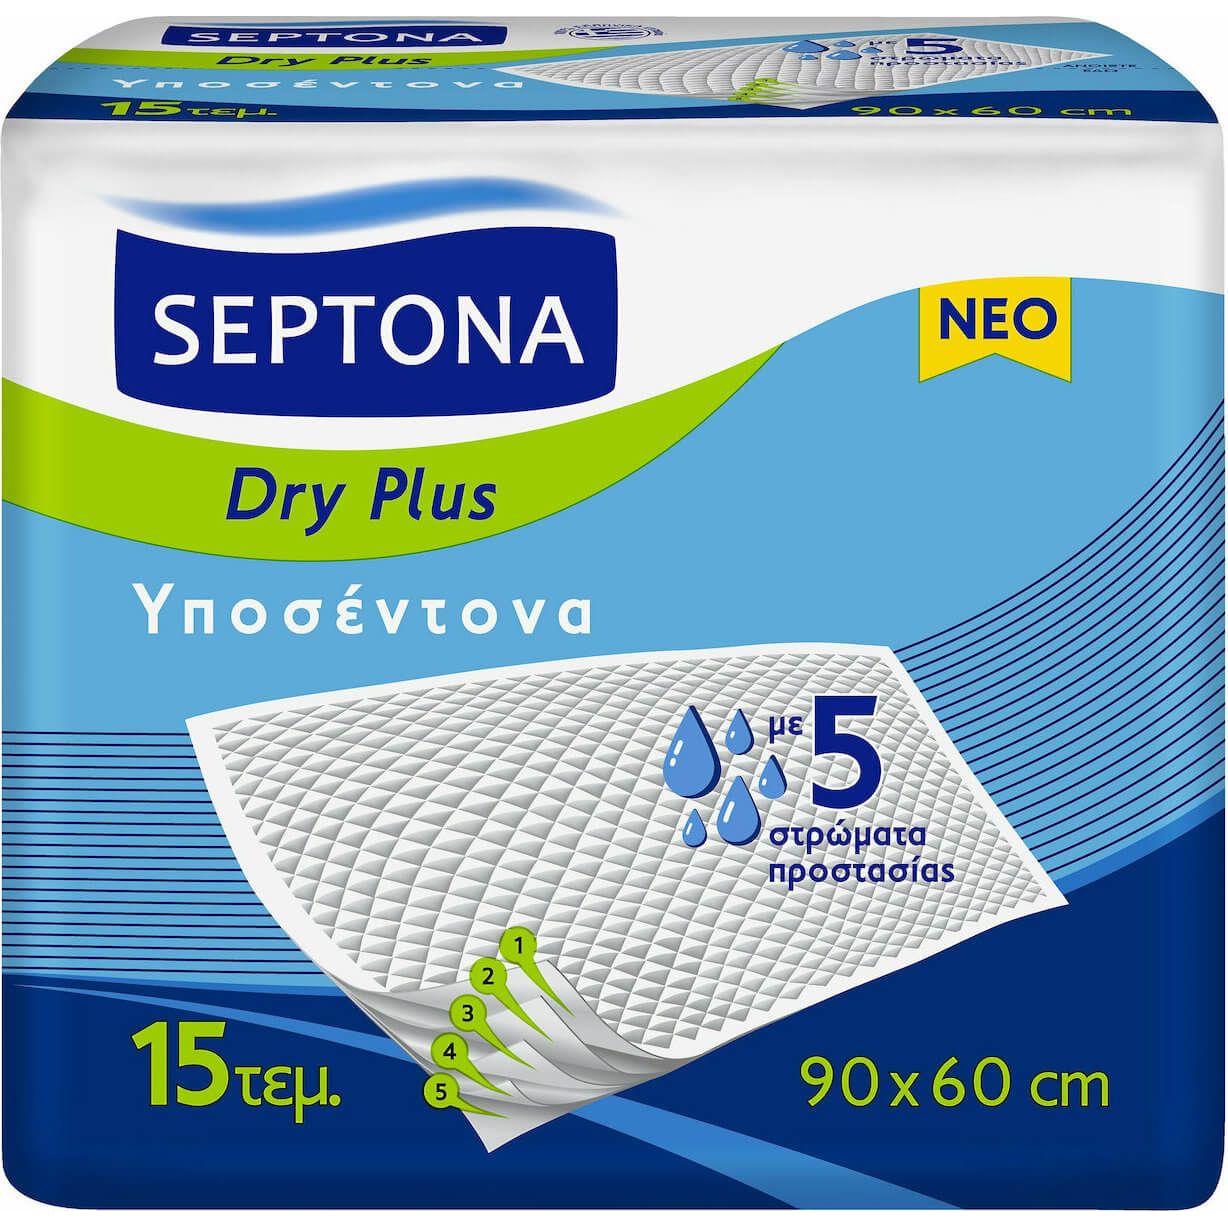 Septona Ακράτειας Dry Plus 60 x 90cm 15τμχ 6τ (5201410890235)